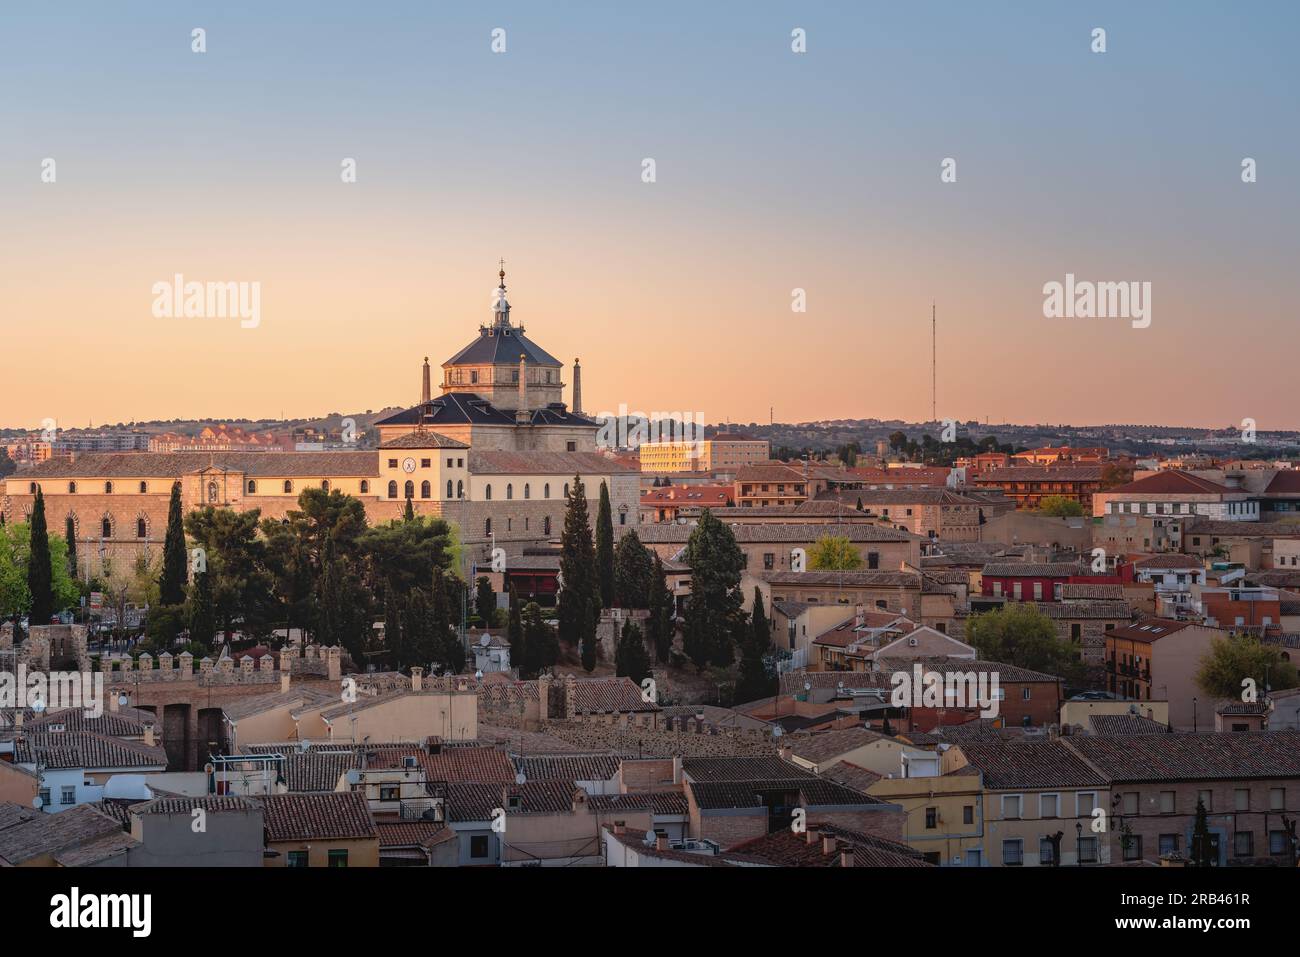 Toledo Skyline at sunset with Hospital Tavera - Toledo, Spain Stock Photo